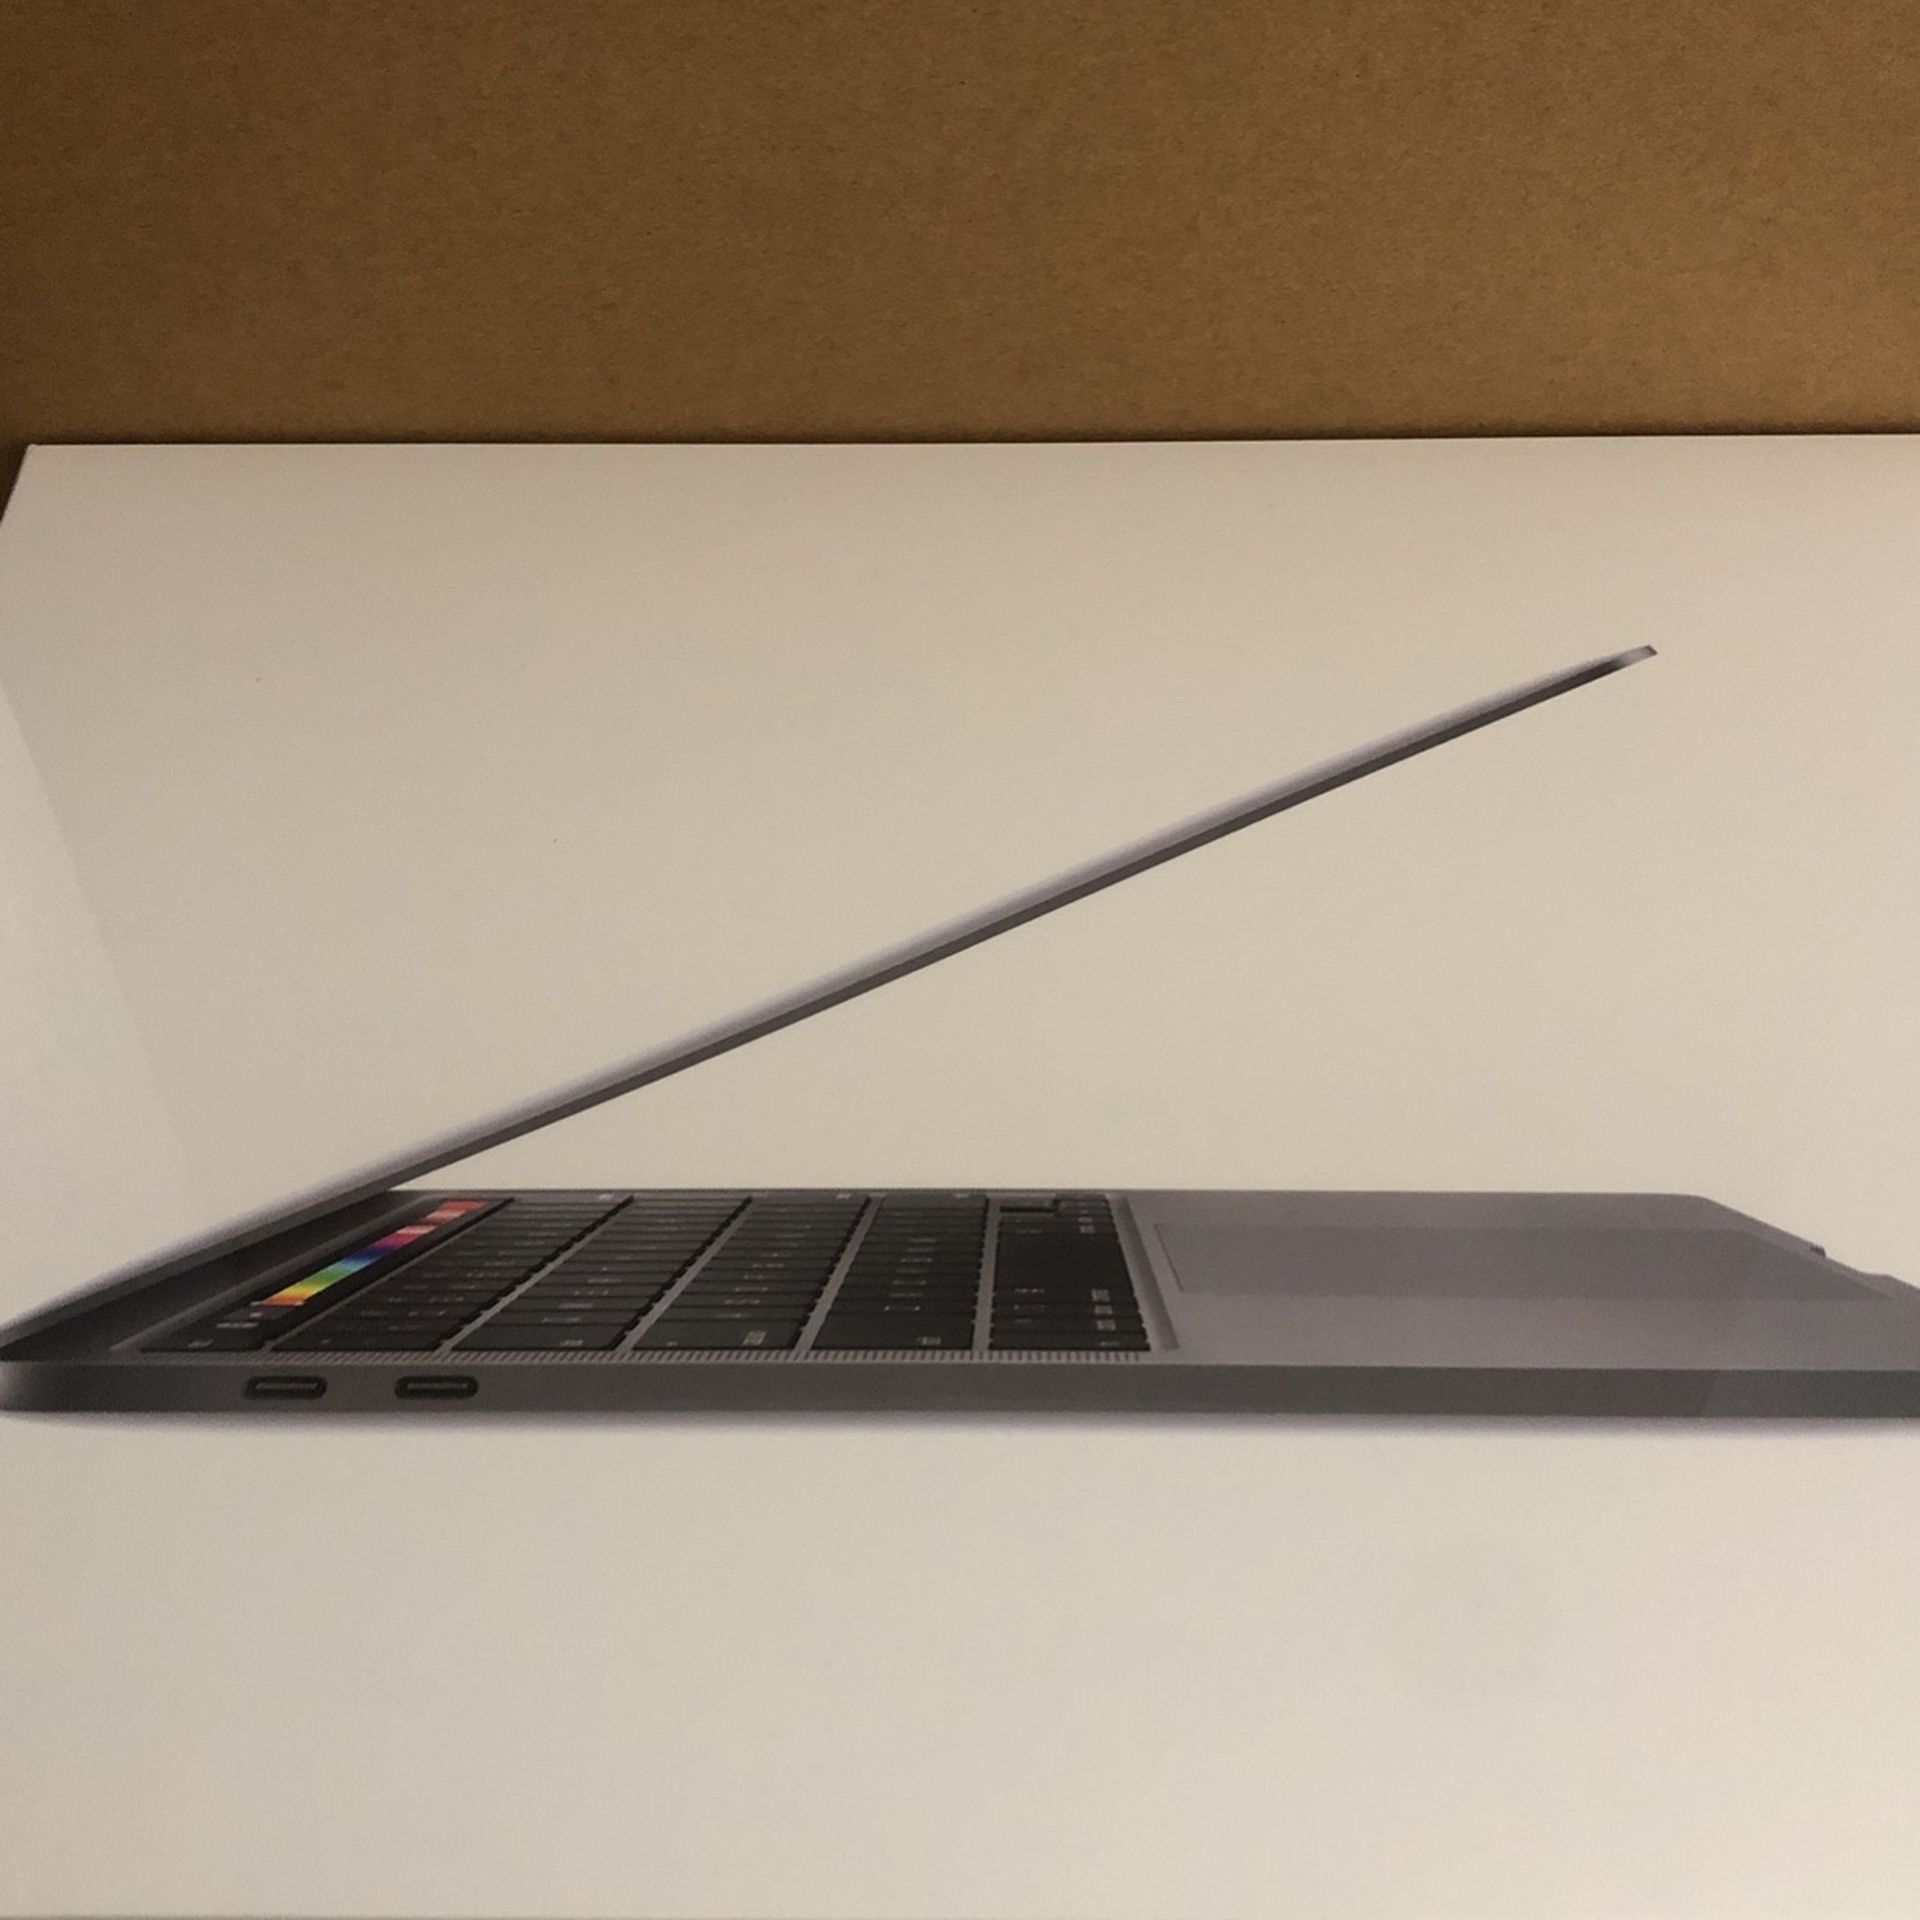 Apple MacBook Pro “ Grey” 512gb